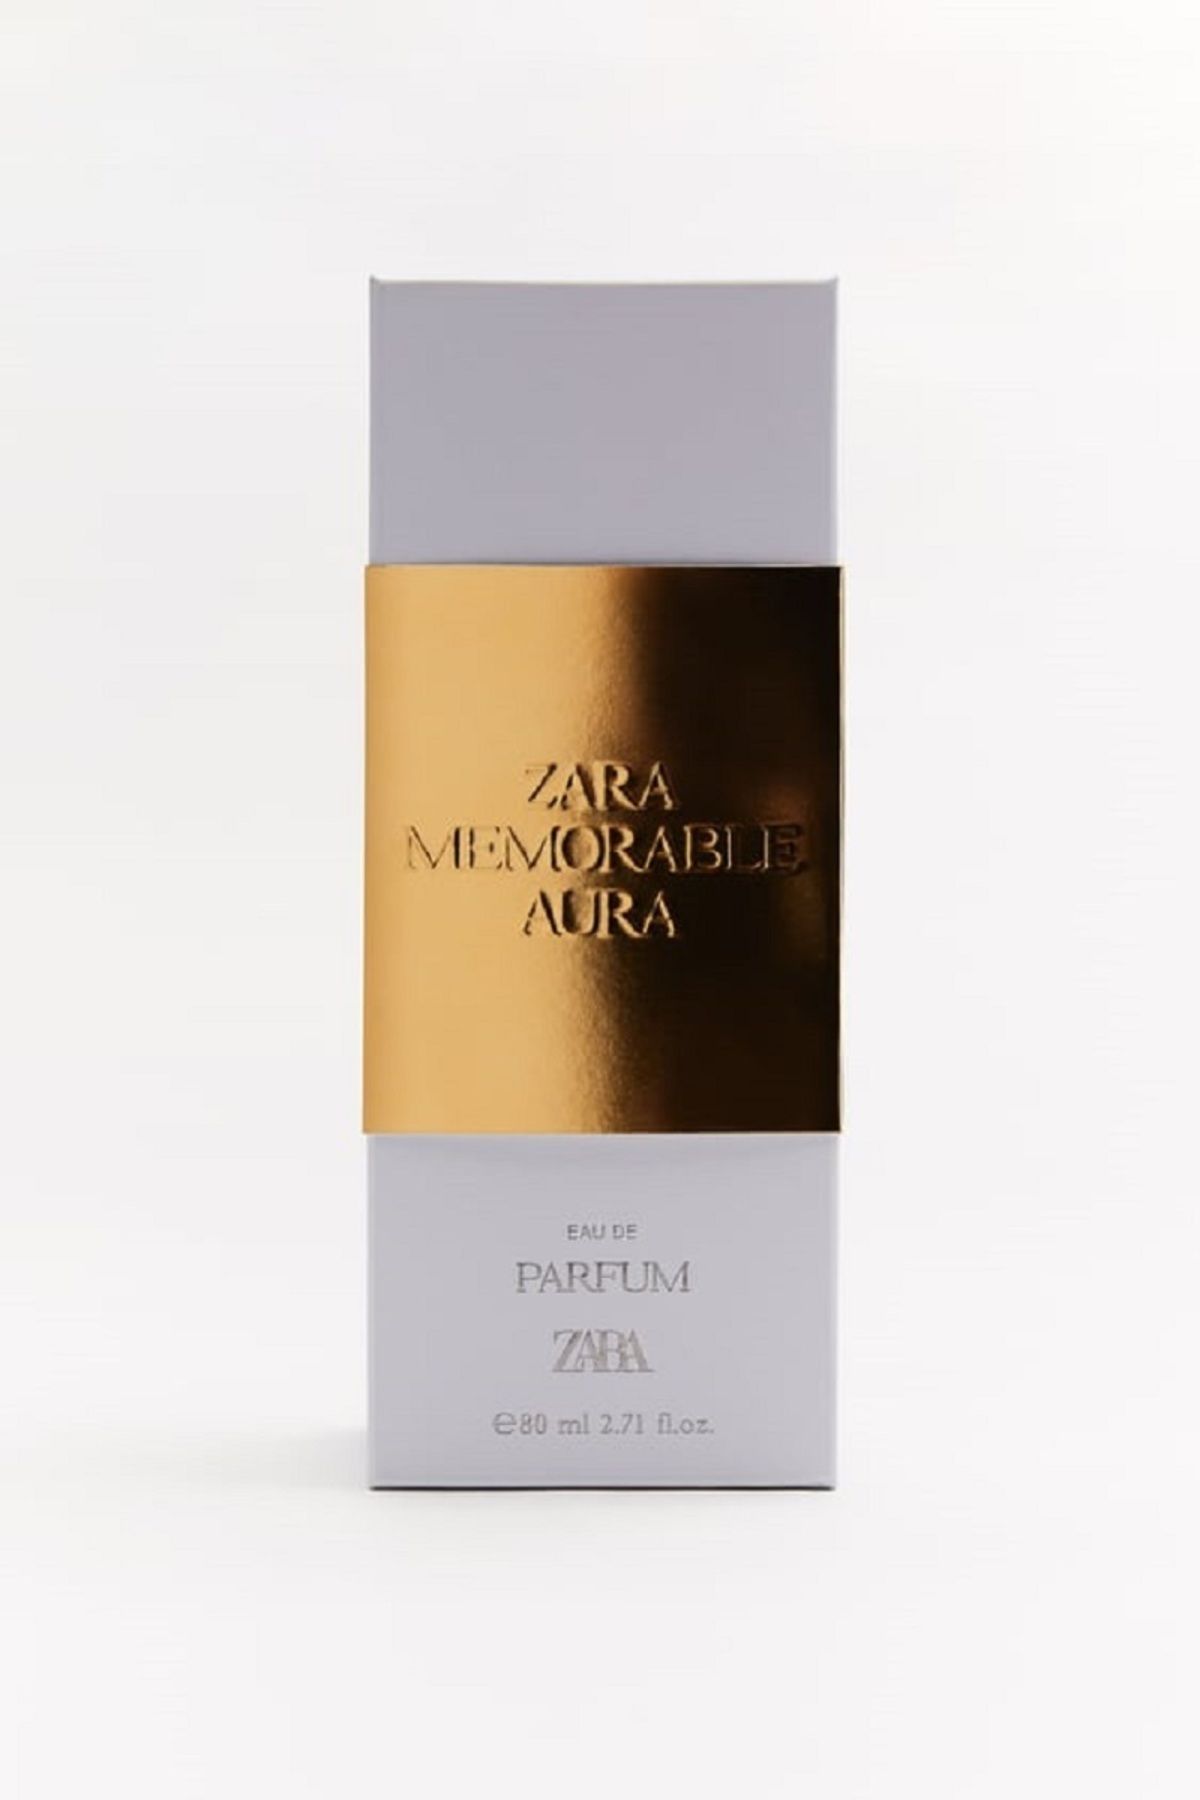 Zara عطر زنانه خاطره انگیز AURA ادوپرفیوم 80 ML (2.7 FL. OZ)